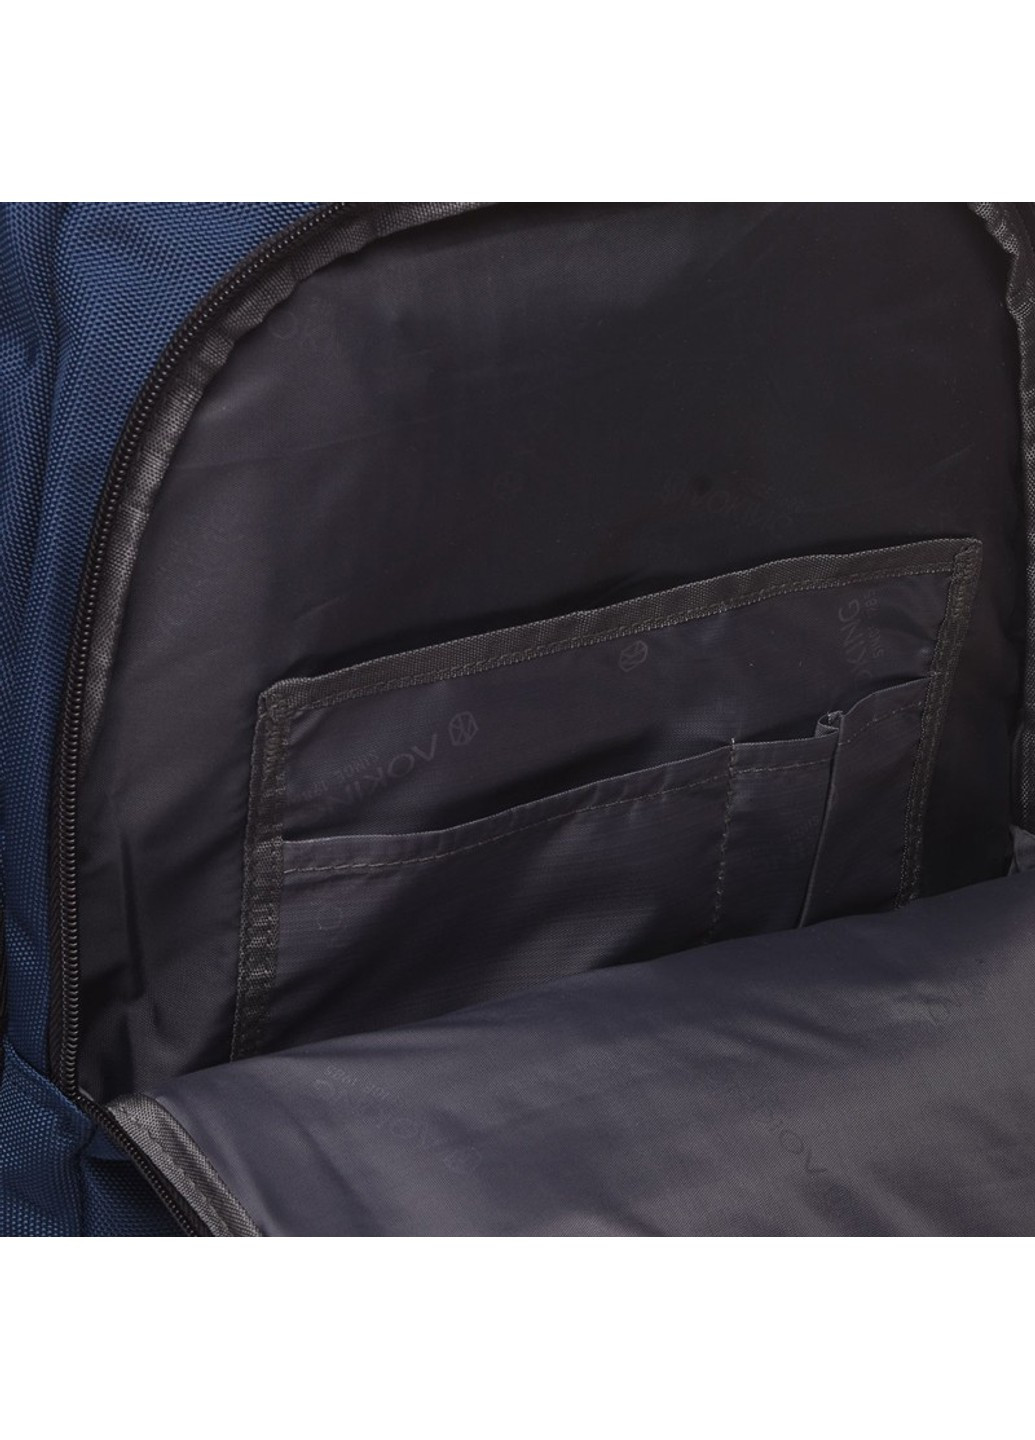 Мужской рюкзак под ноутбук 1sn67886-navy Ricco Grande (271998051)